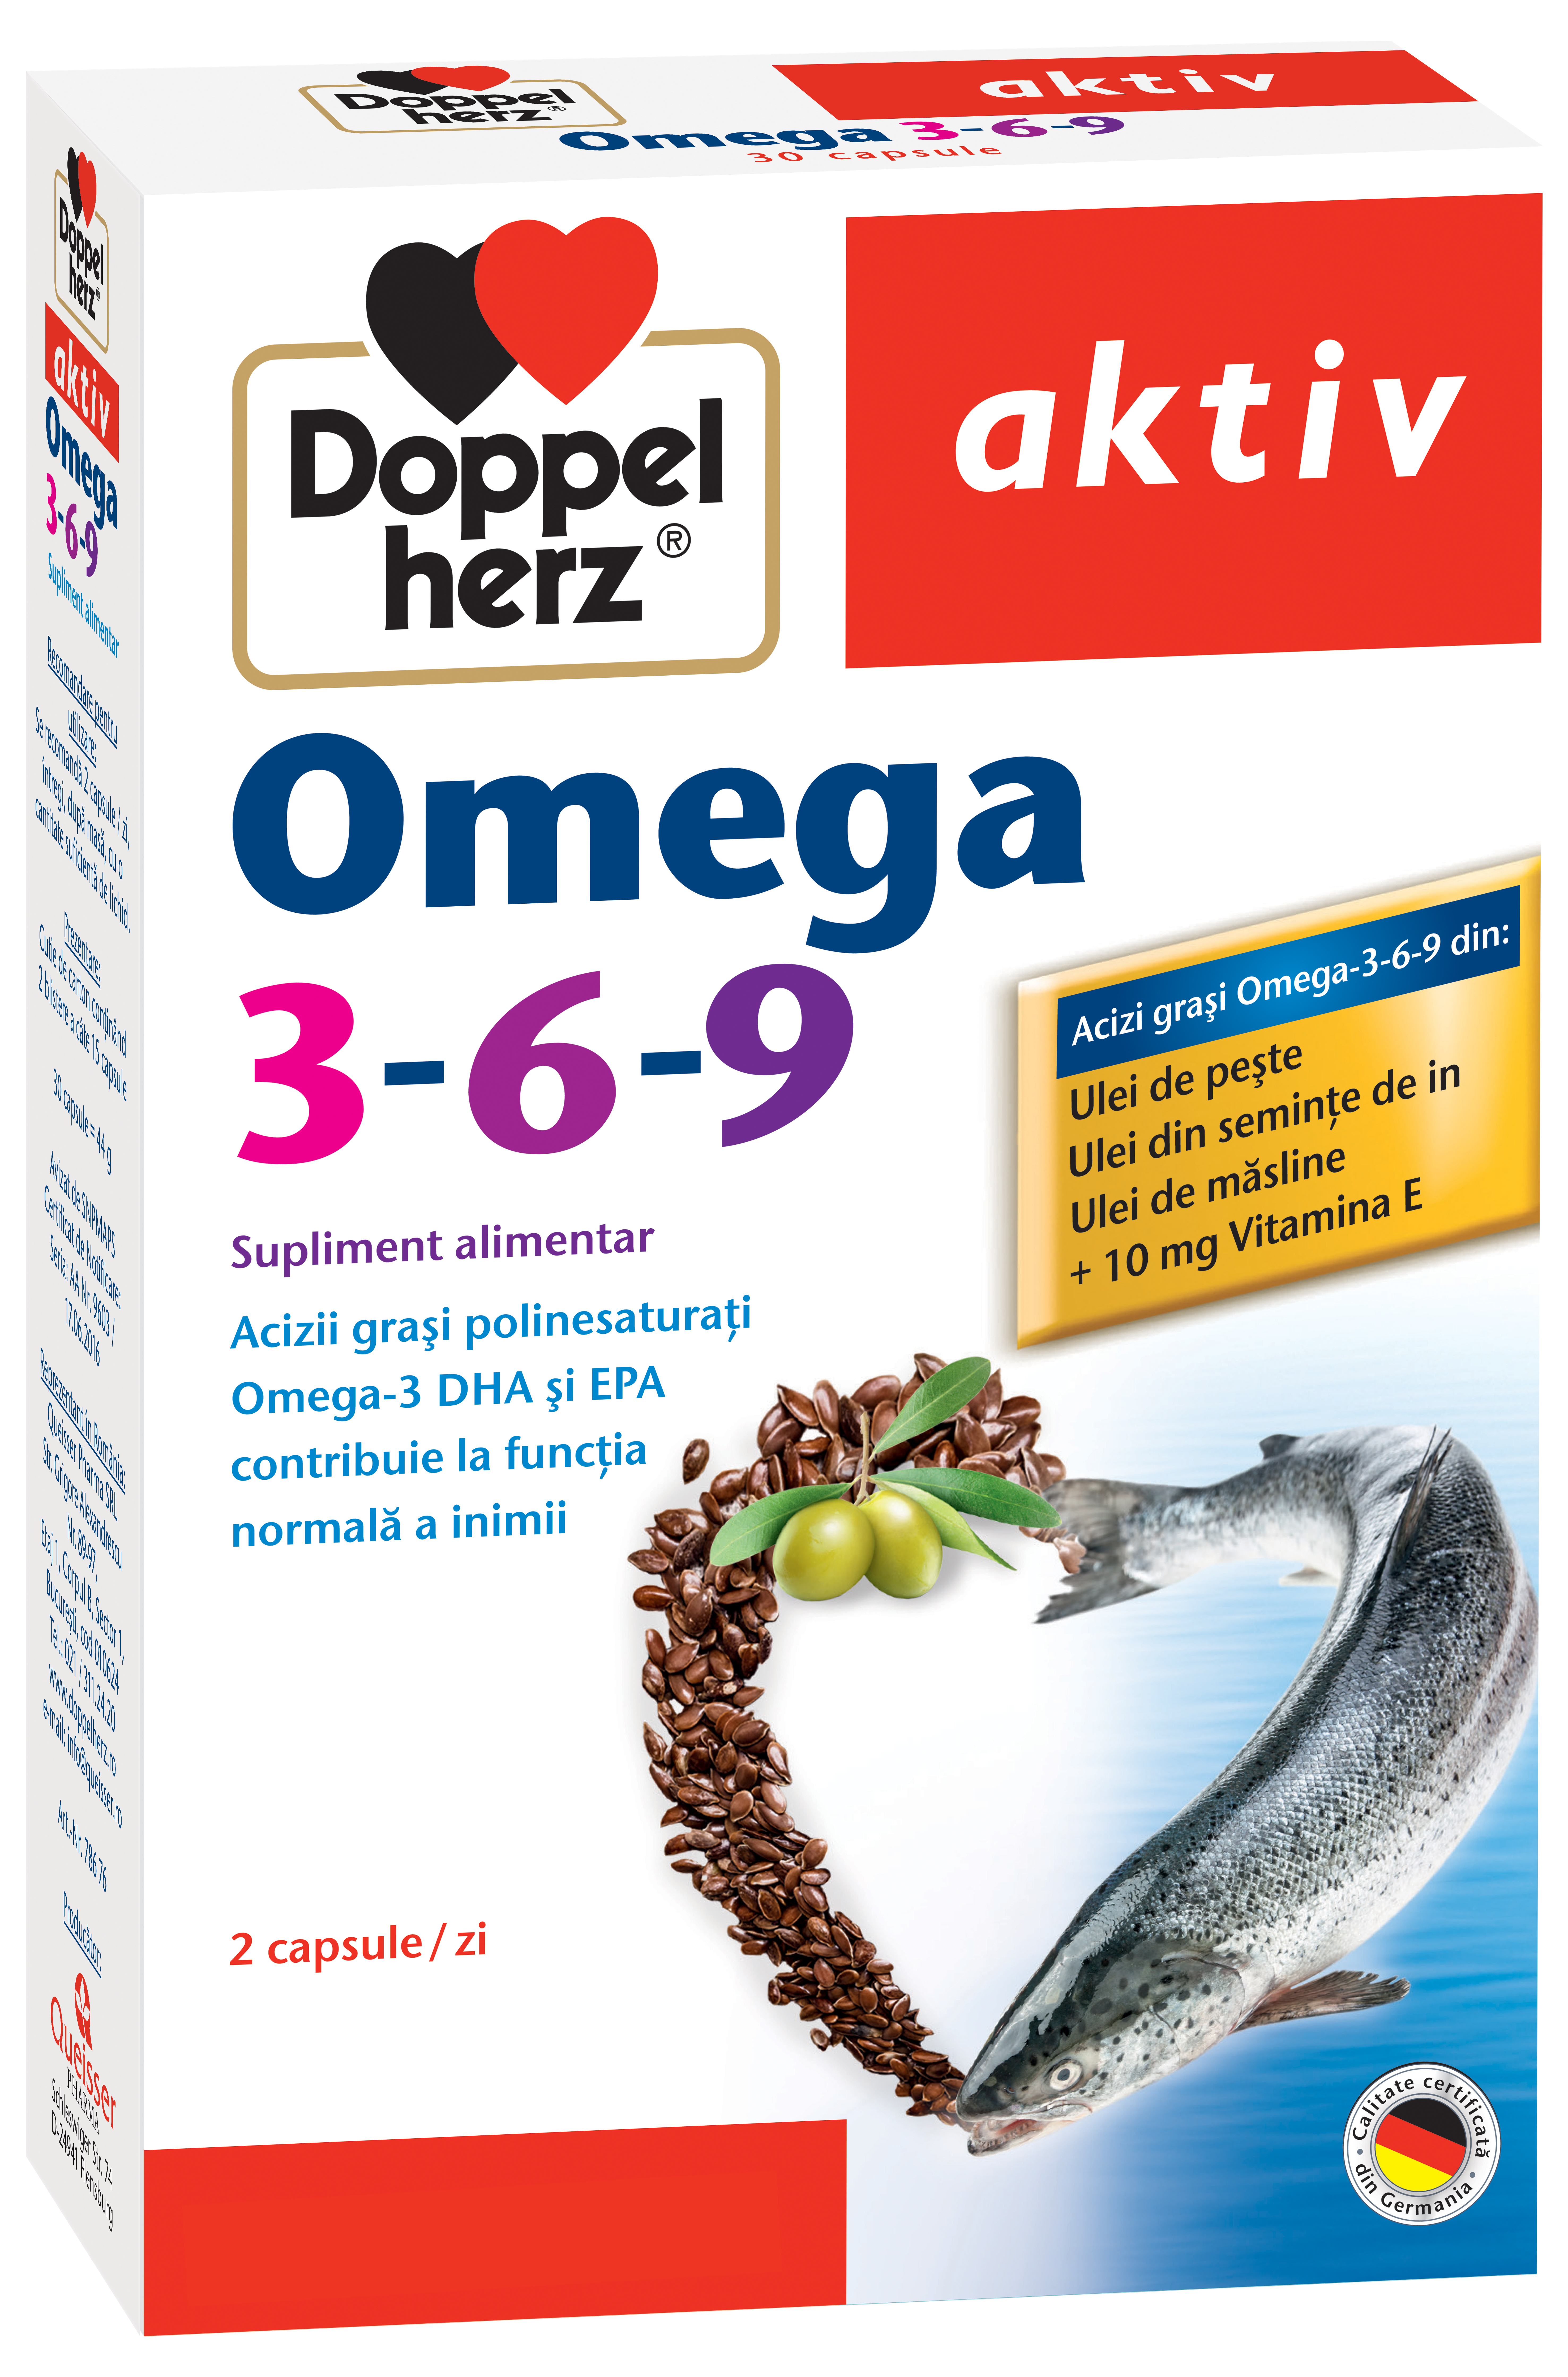 Cardiologie - Doppelherz aktiv Omega 3-6-9 x 30 capsule, medik-on.ro